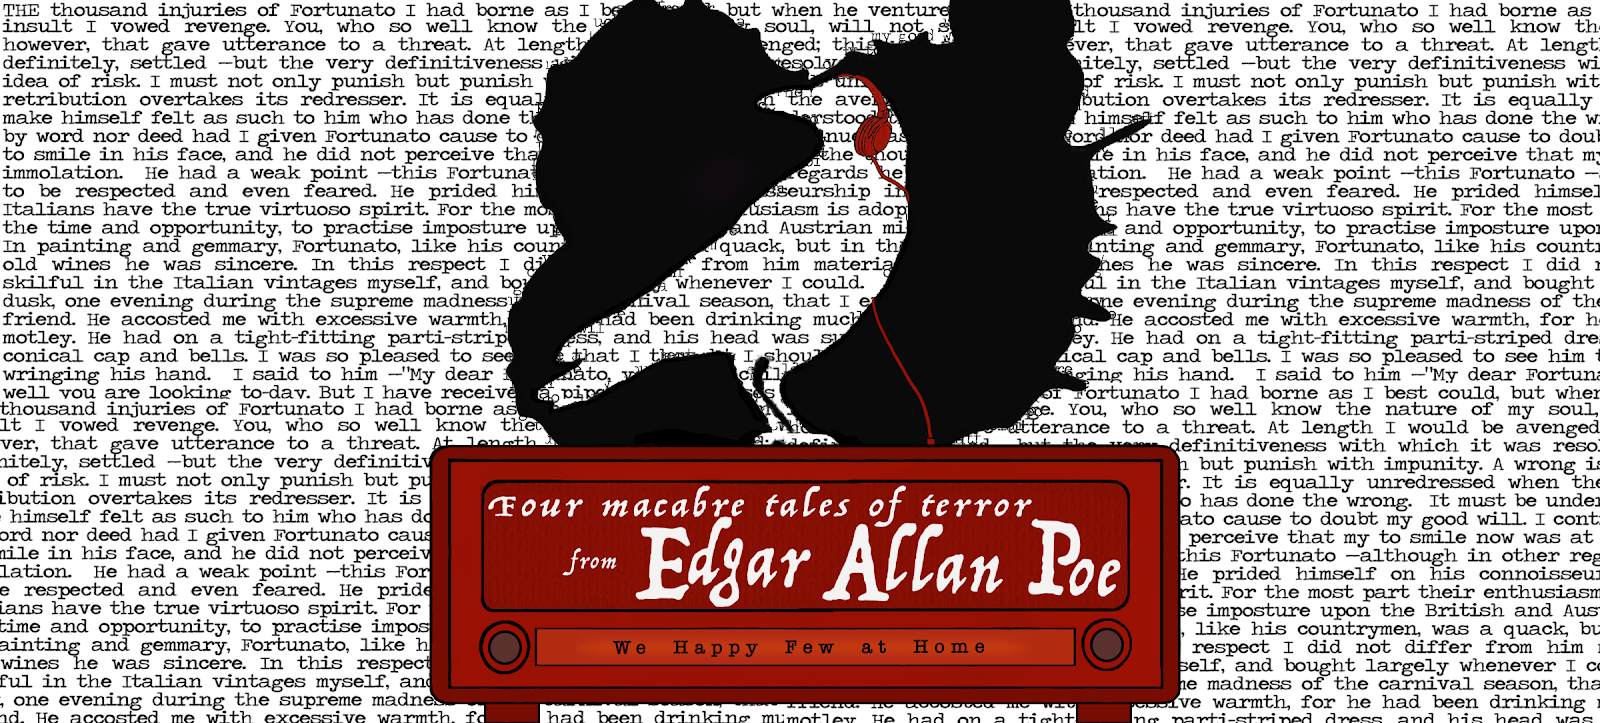 Audio Poe Promo Image